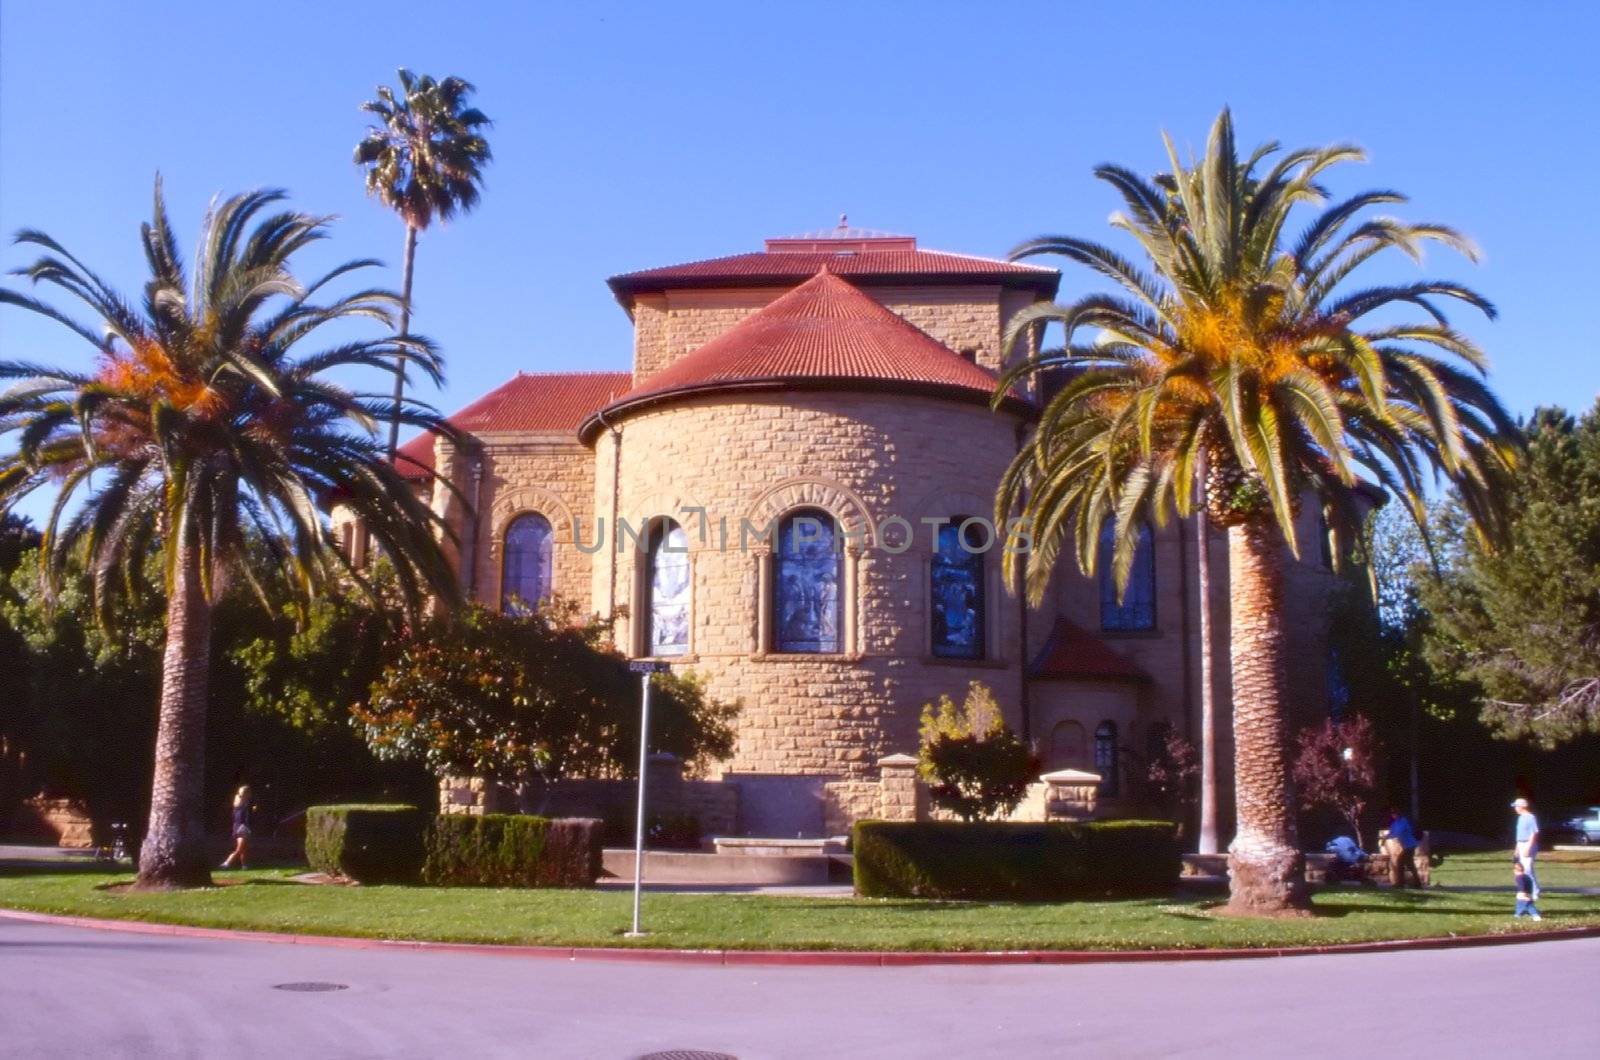 Church on Stanford University campus